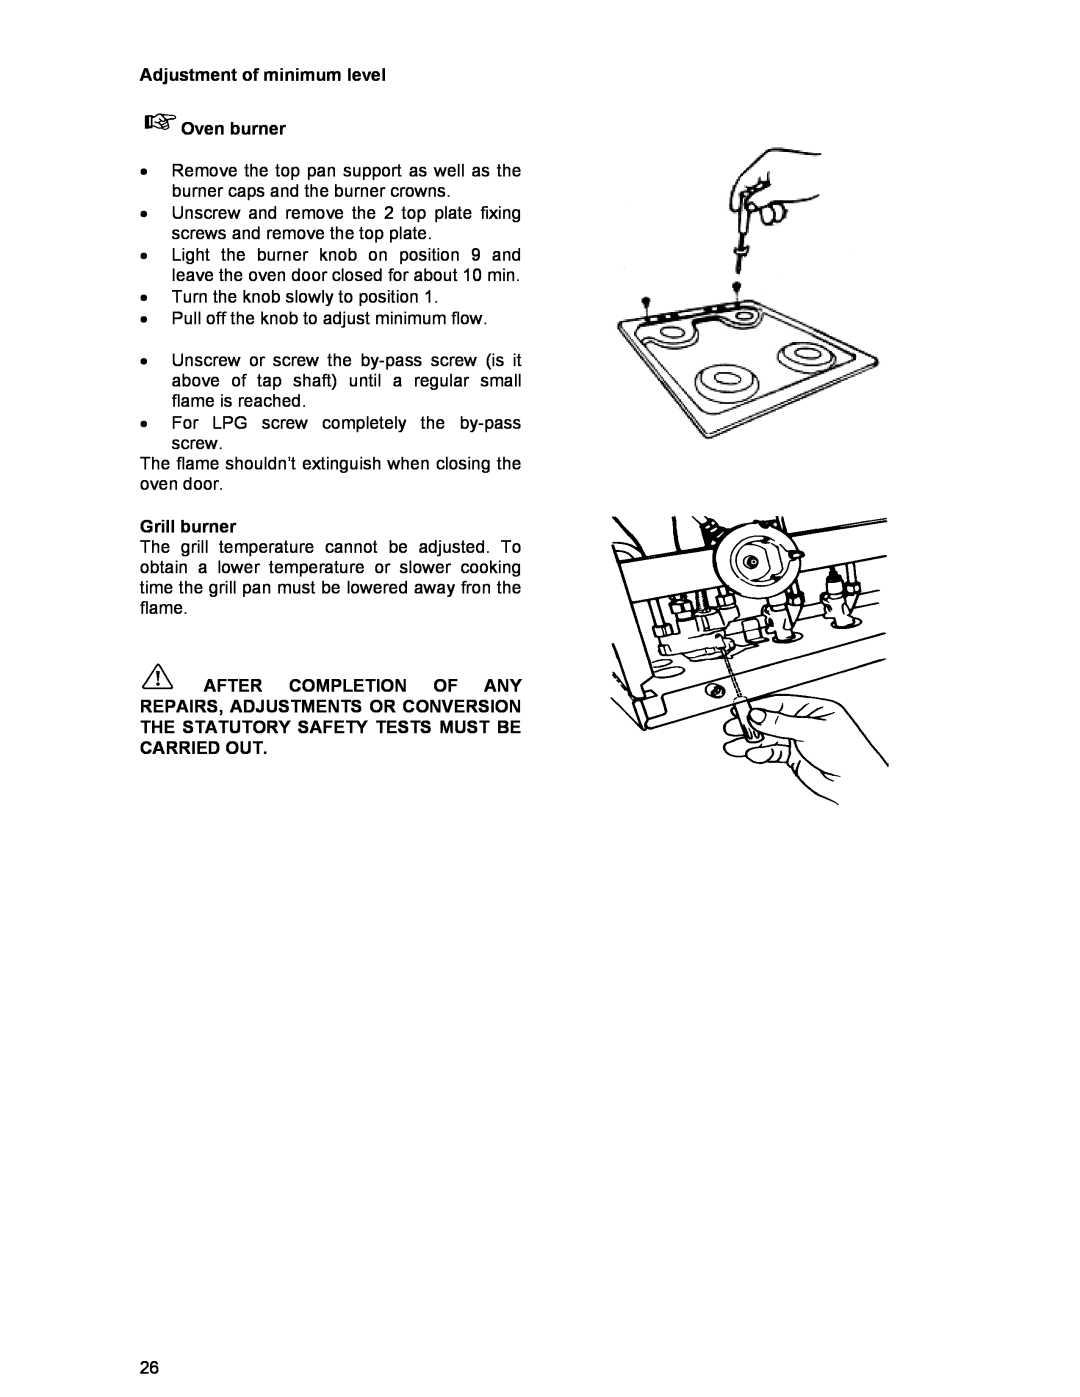 Moffat GSC 5061 manual Adjustment of minimum level Oven burner, Grill burner 